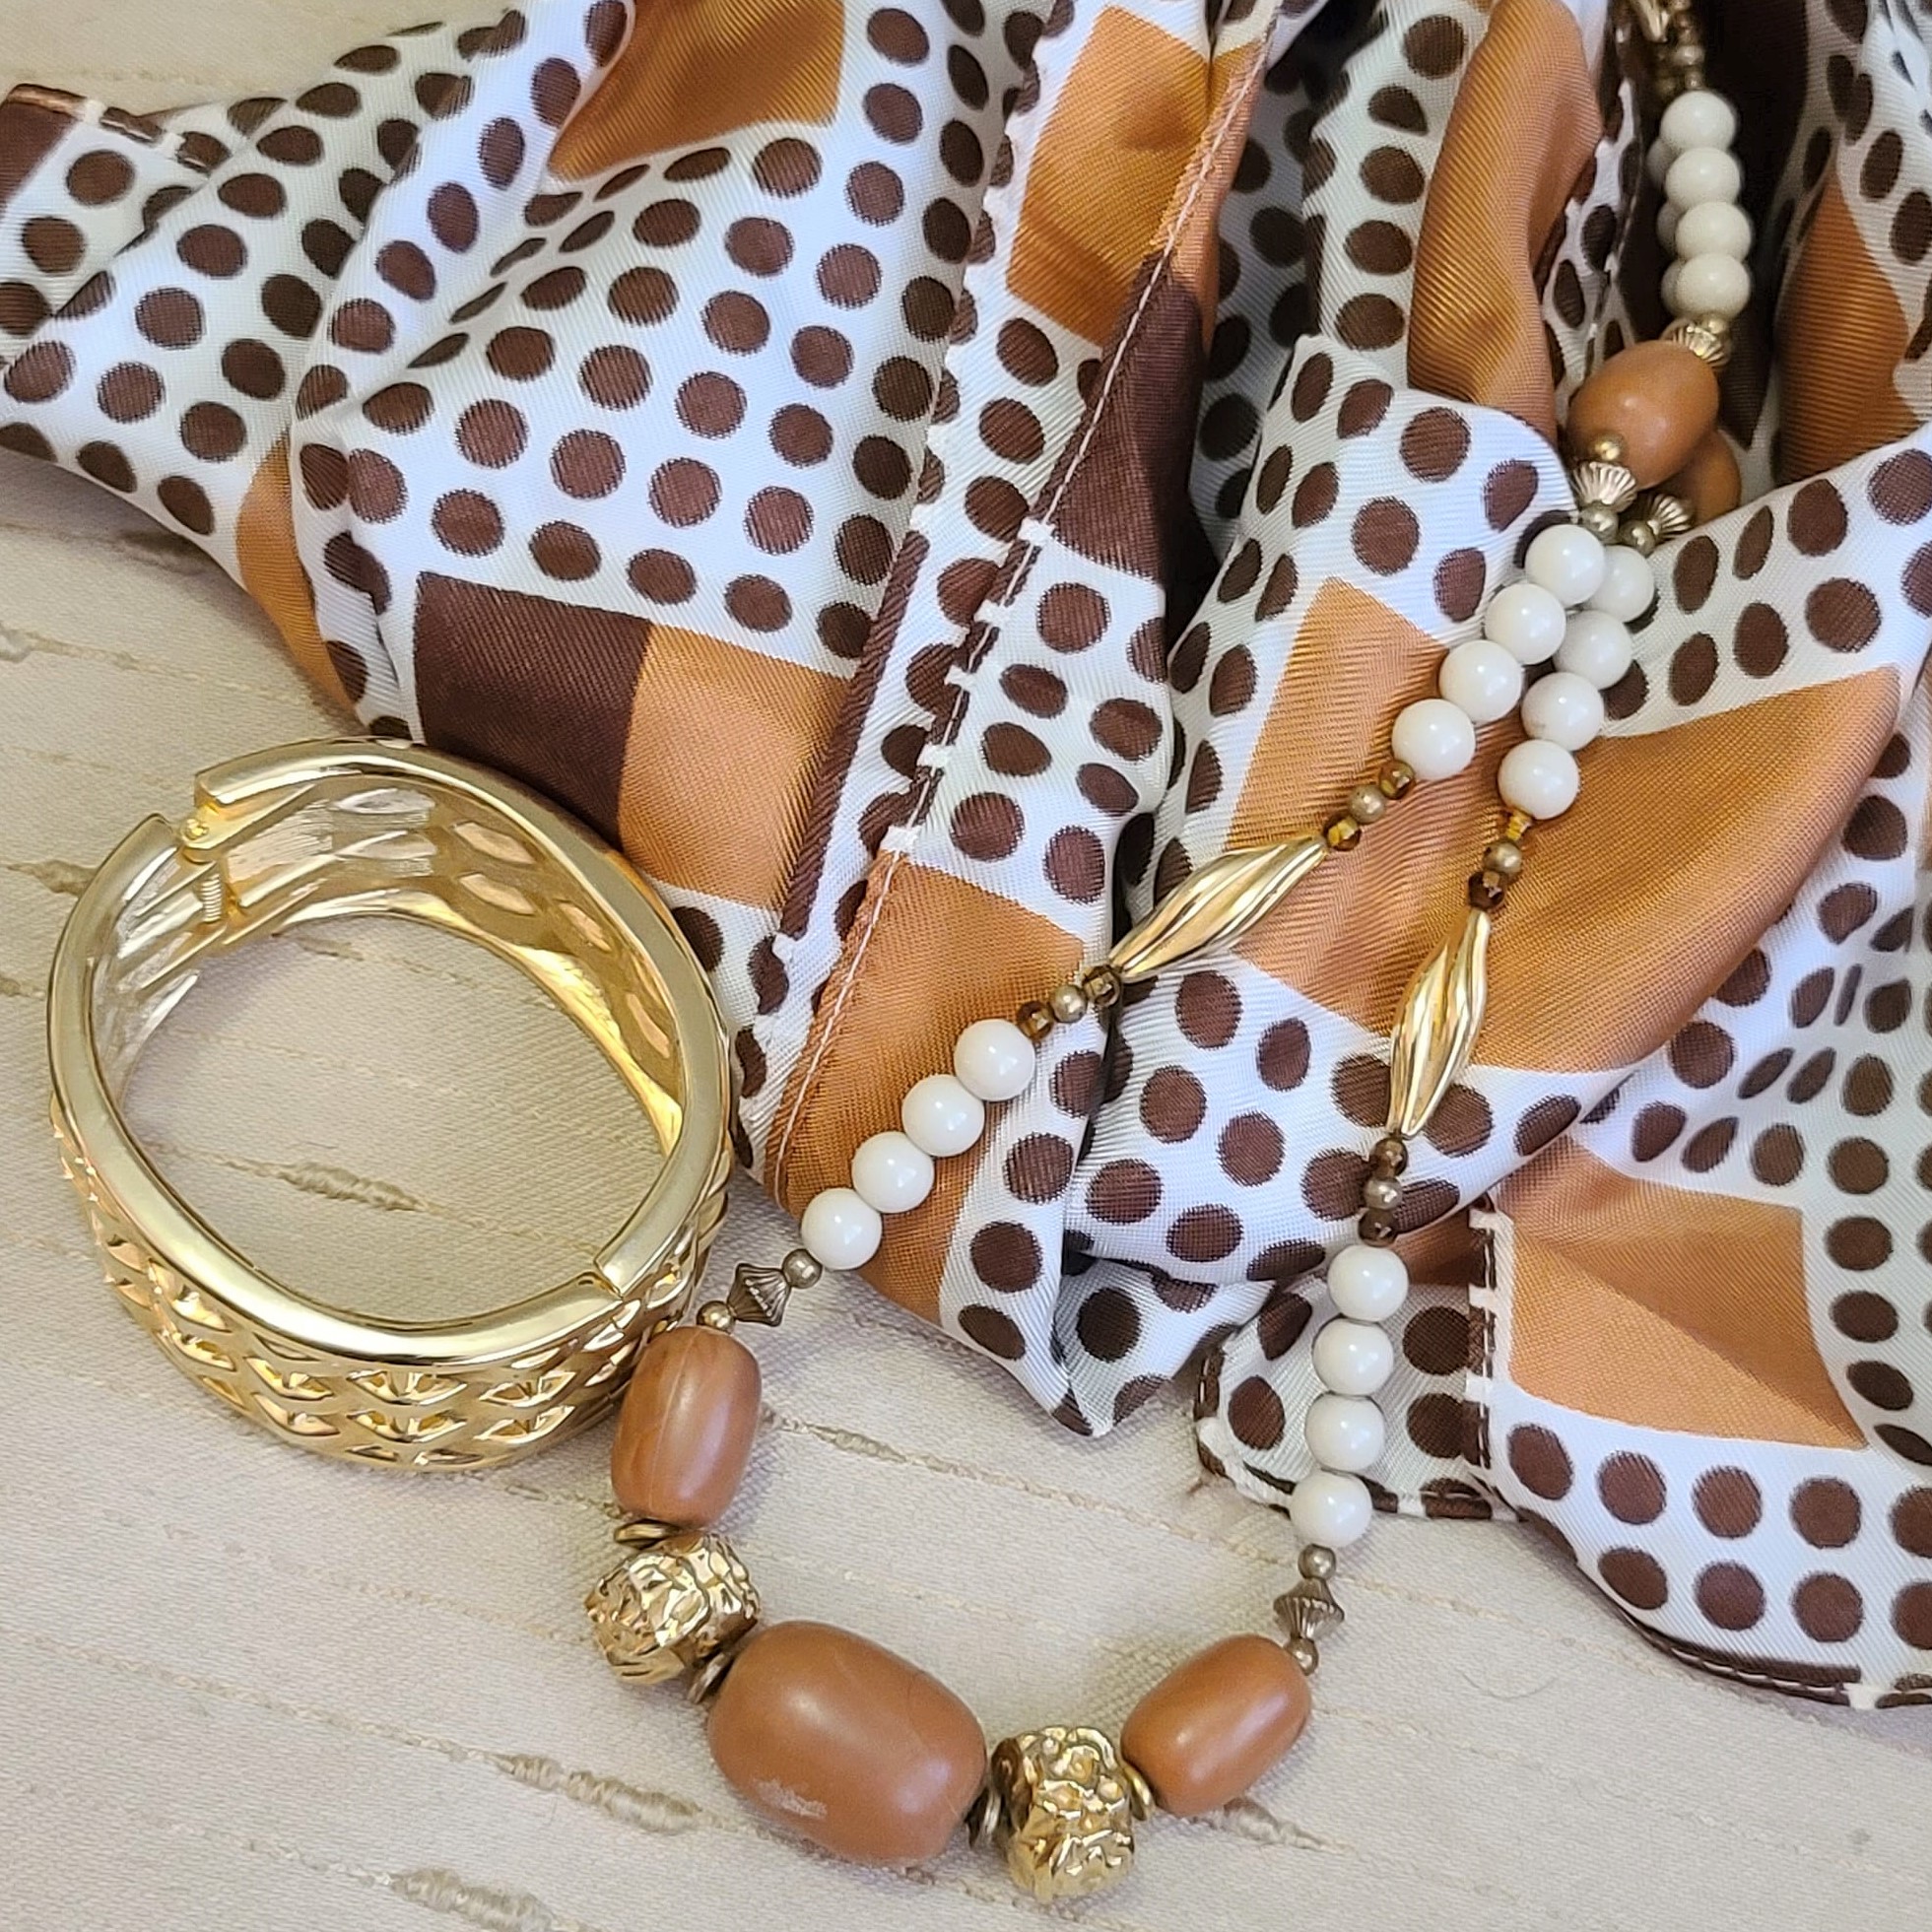 Vintage 1970's brown hues scarf, matched necklace and bracelet